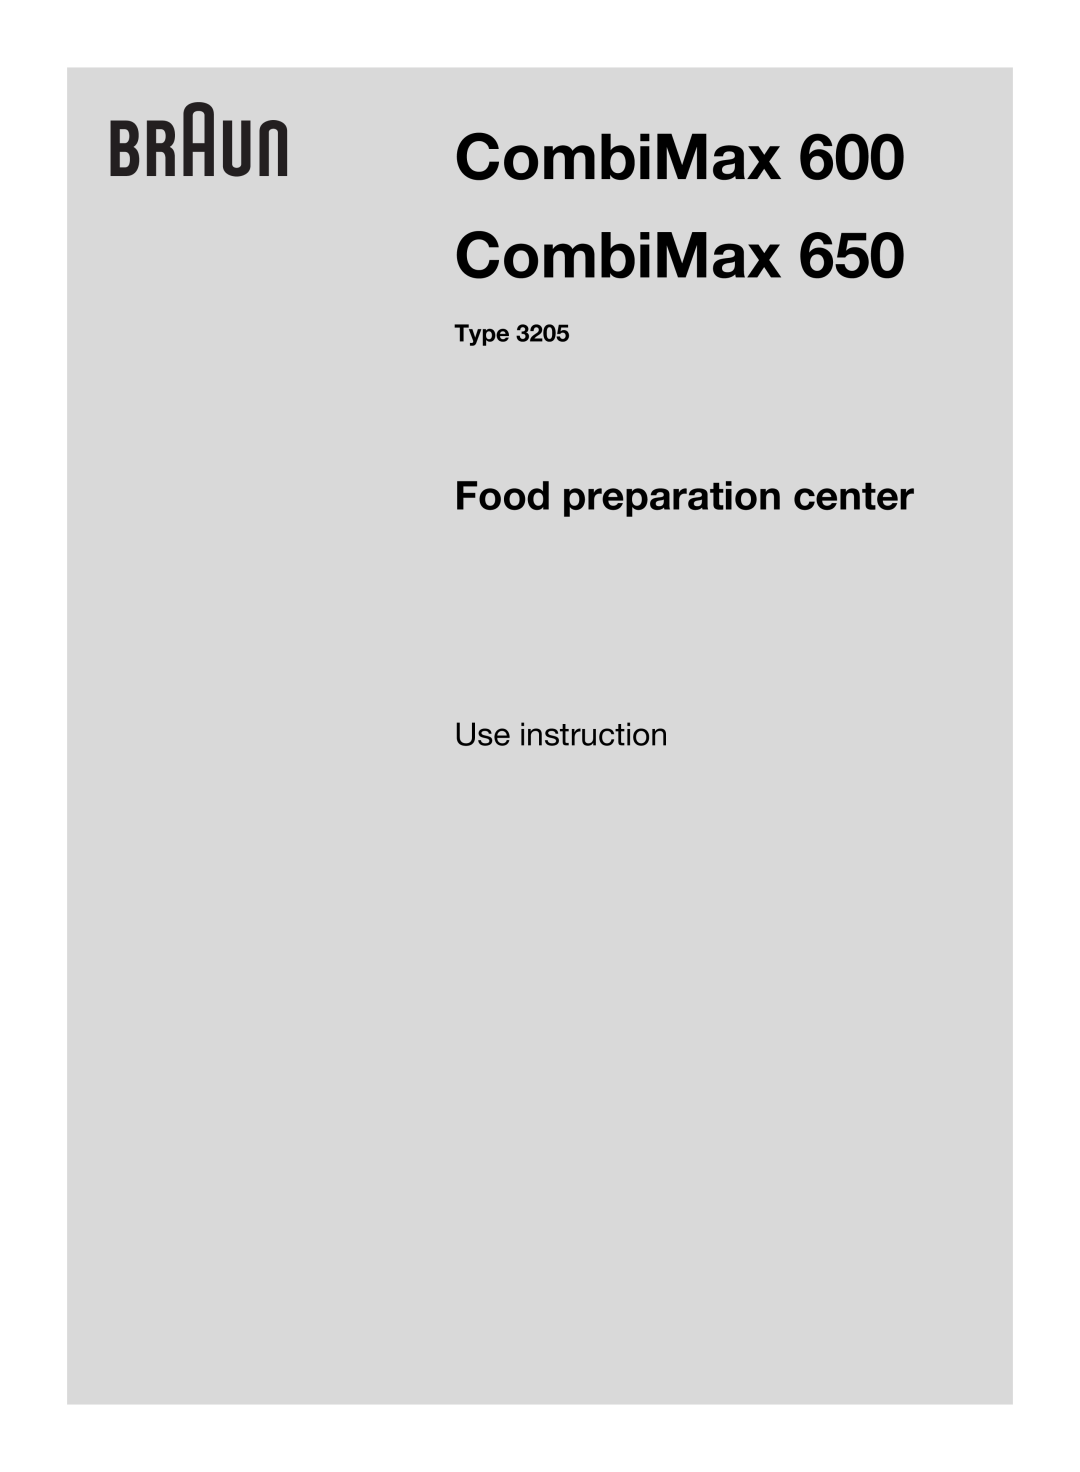 Braun 600, 650 manual CombiMax CombiMax, Food preparation center, Use instruction, Type 